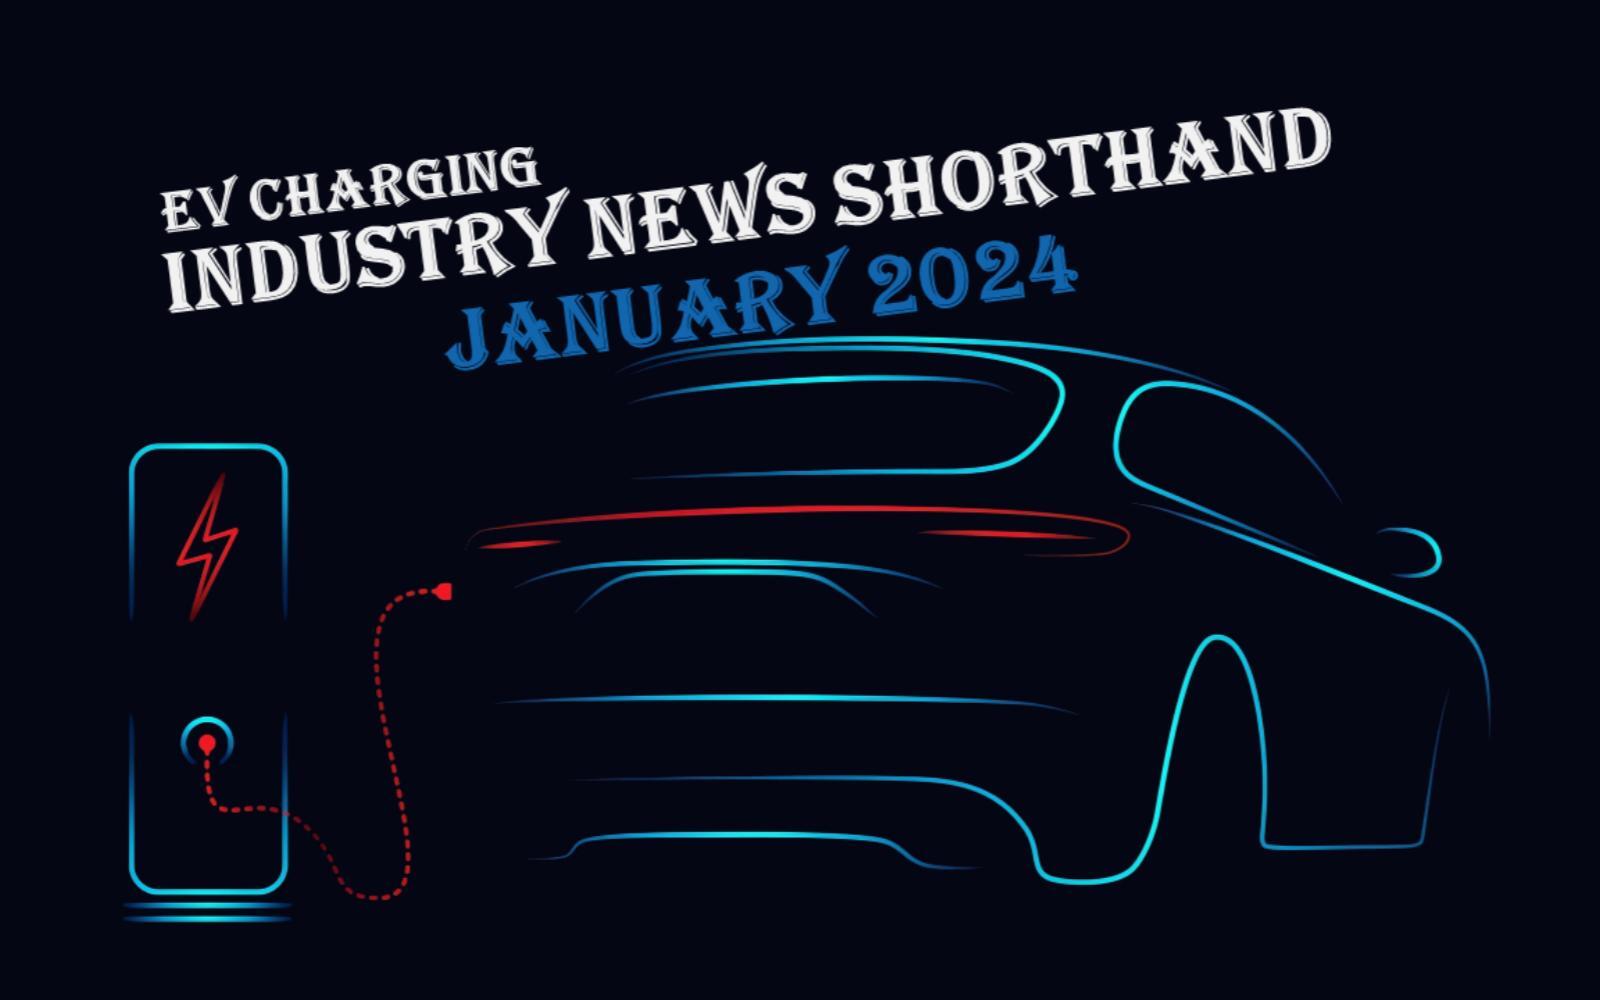 January 2024 EV charging industry news summary